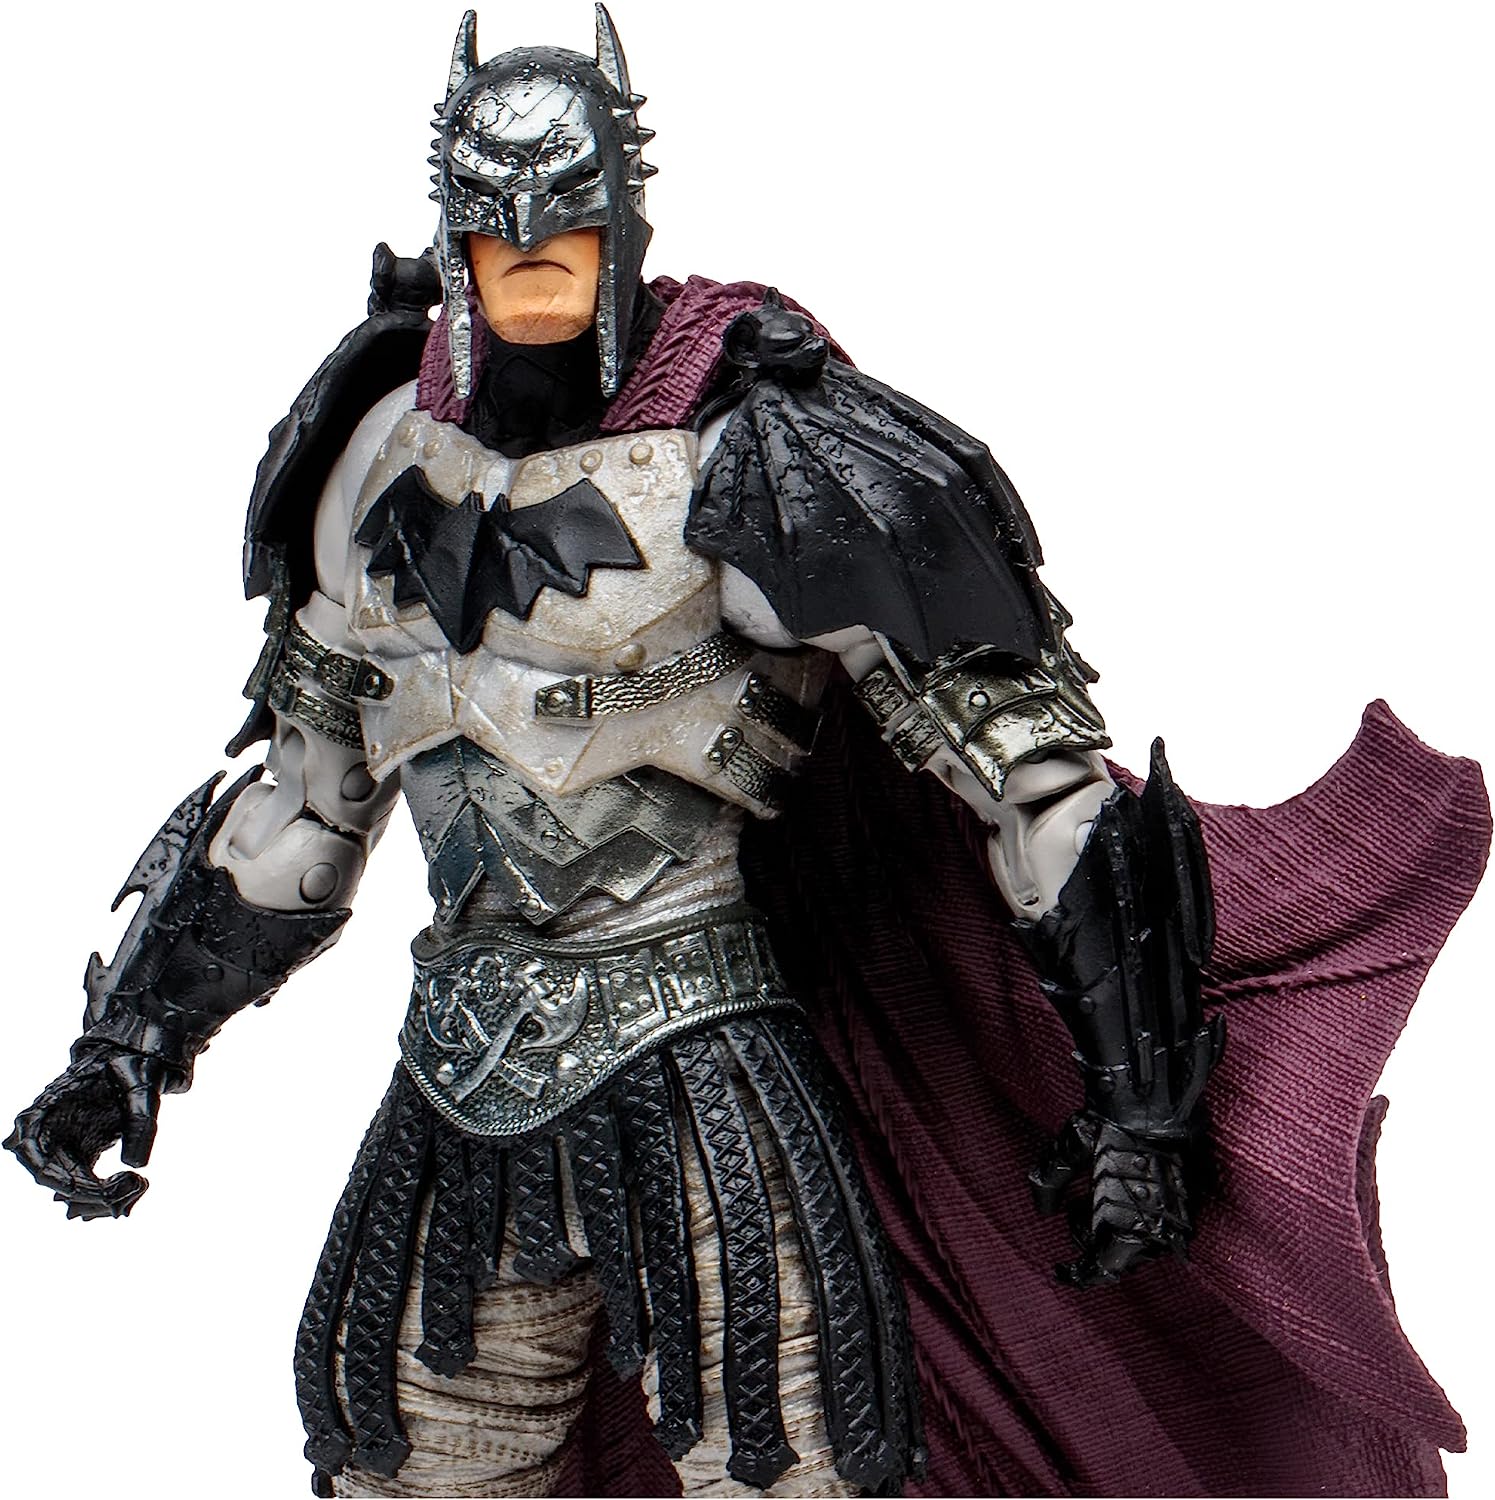 Mcfarlane Toys Gladiator Dark Nights Metal Batman 7 Inch Action Figure